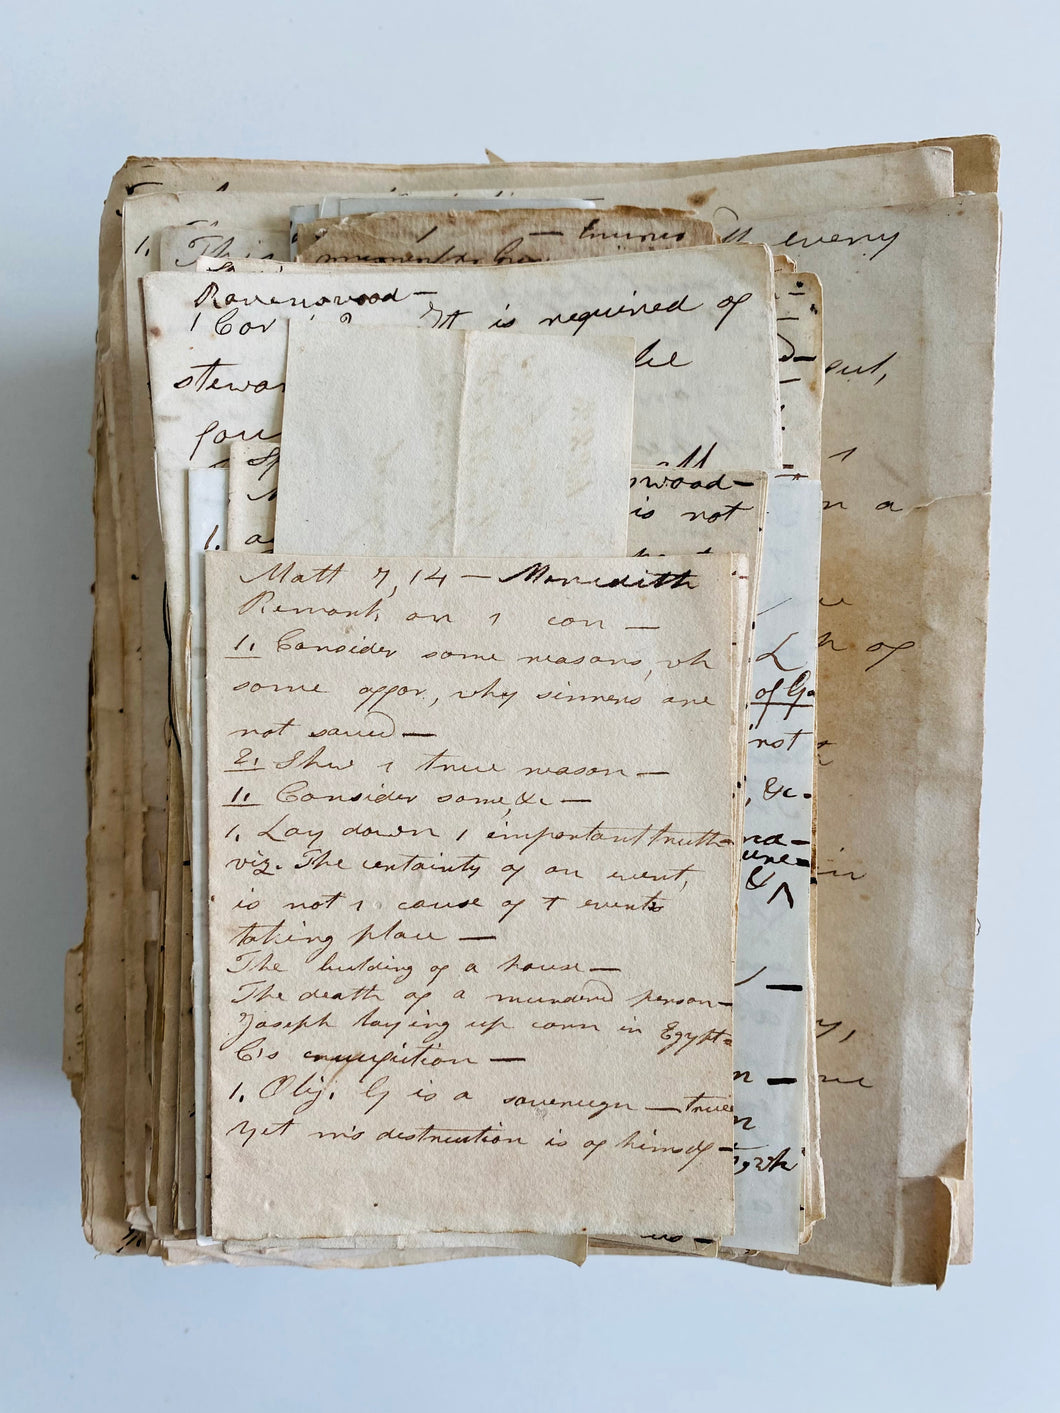 1755-1830 SAMUEL SARGENT. 2500pp Manuscript Archive of Second Great Awakening Missionary-Evangelist.